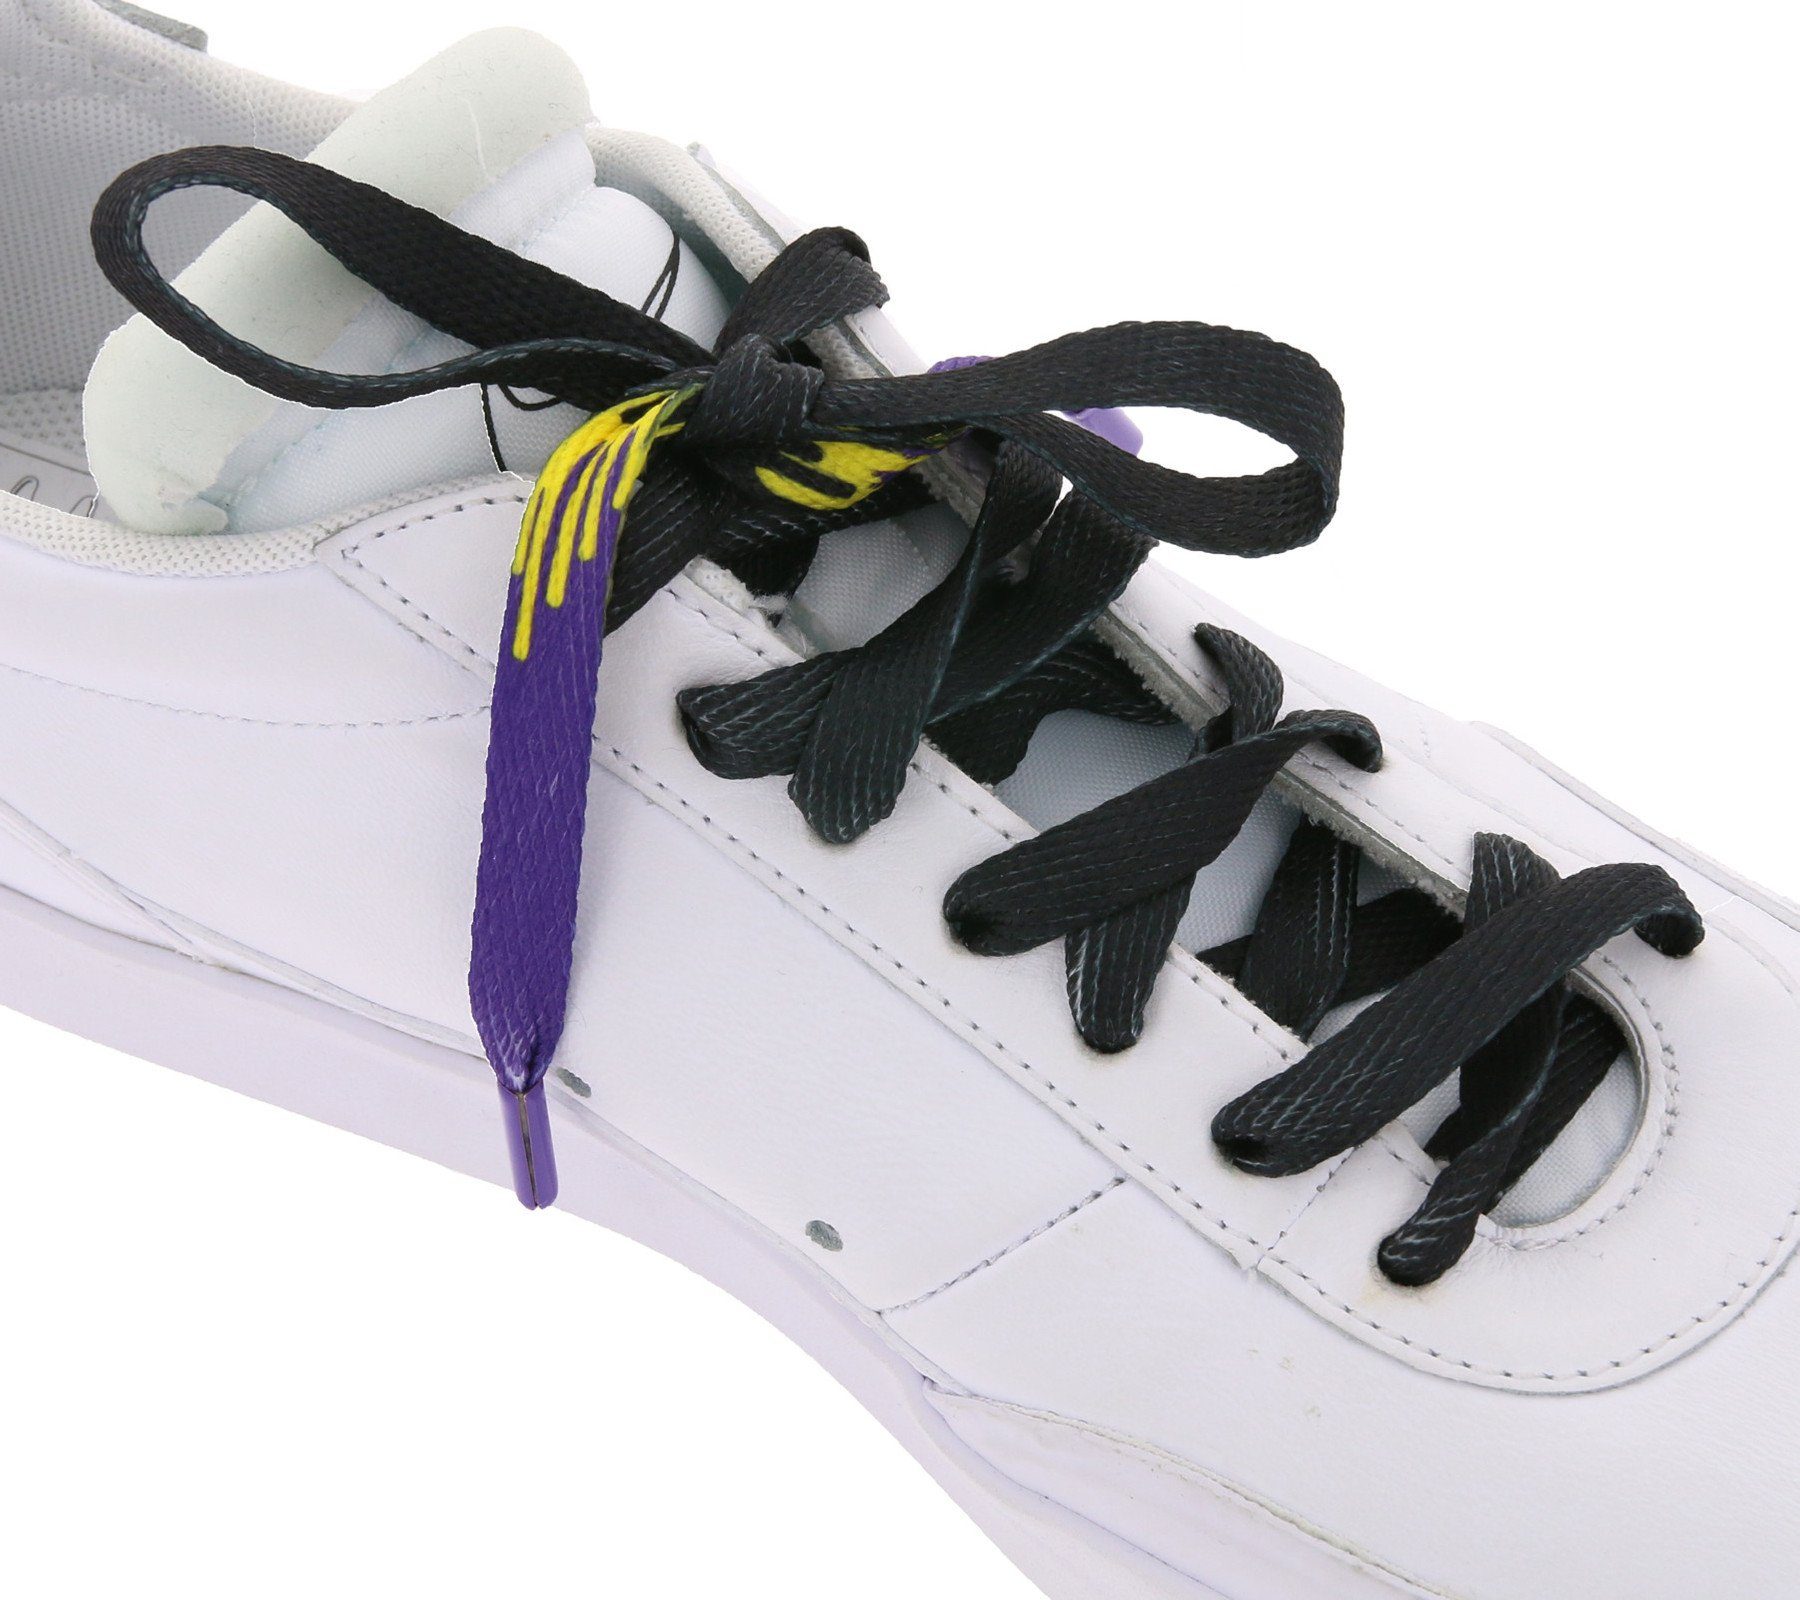 Tubelaces Schnürsenkel TubeLaces Schuhe Schuhbänder coole Schnürsenkel Schnürbänder Schwarz/Violett/Gelb | Schnürsenkel